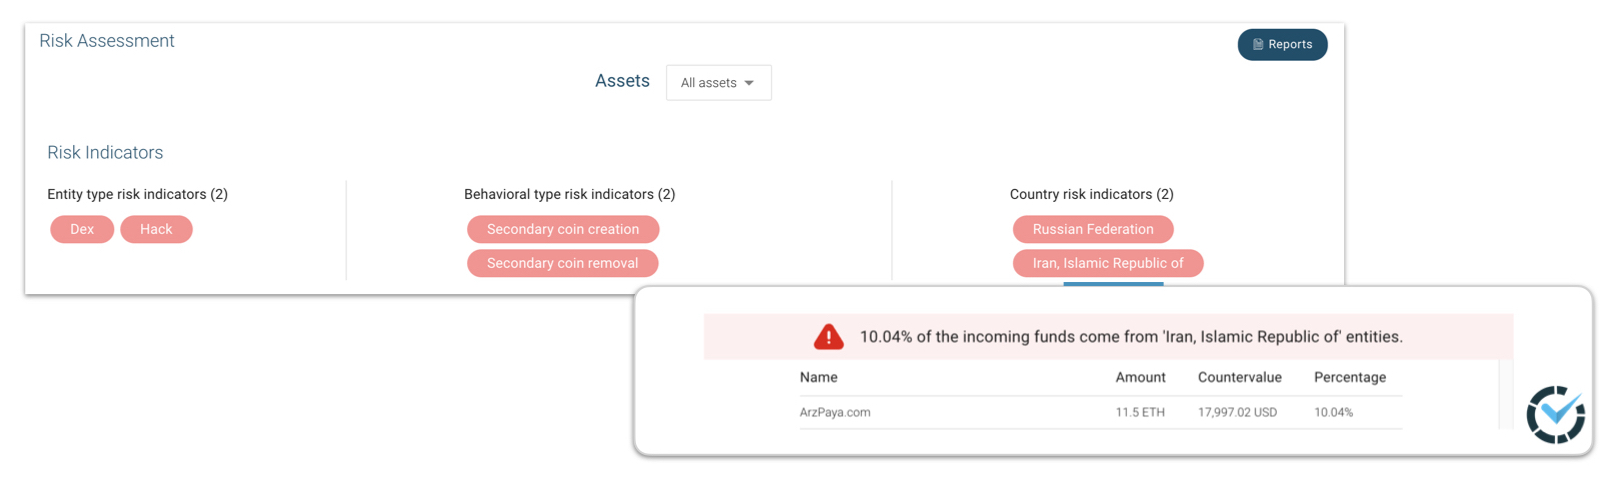 Risk Assessment feature on Scorechain